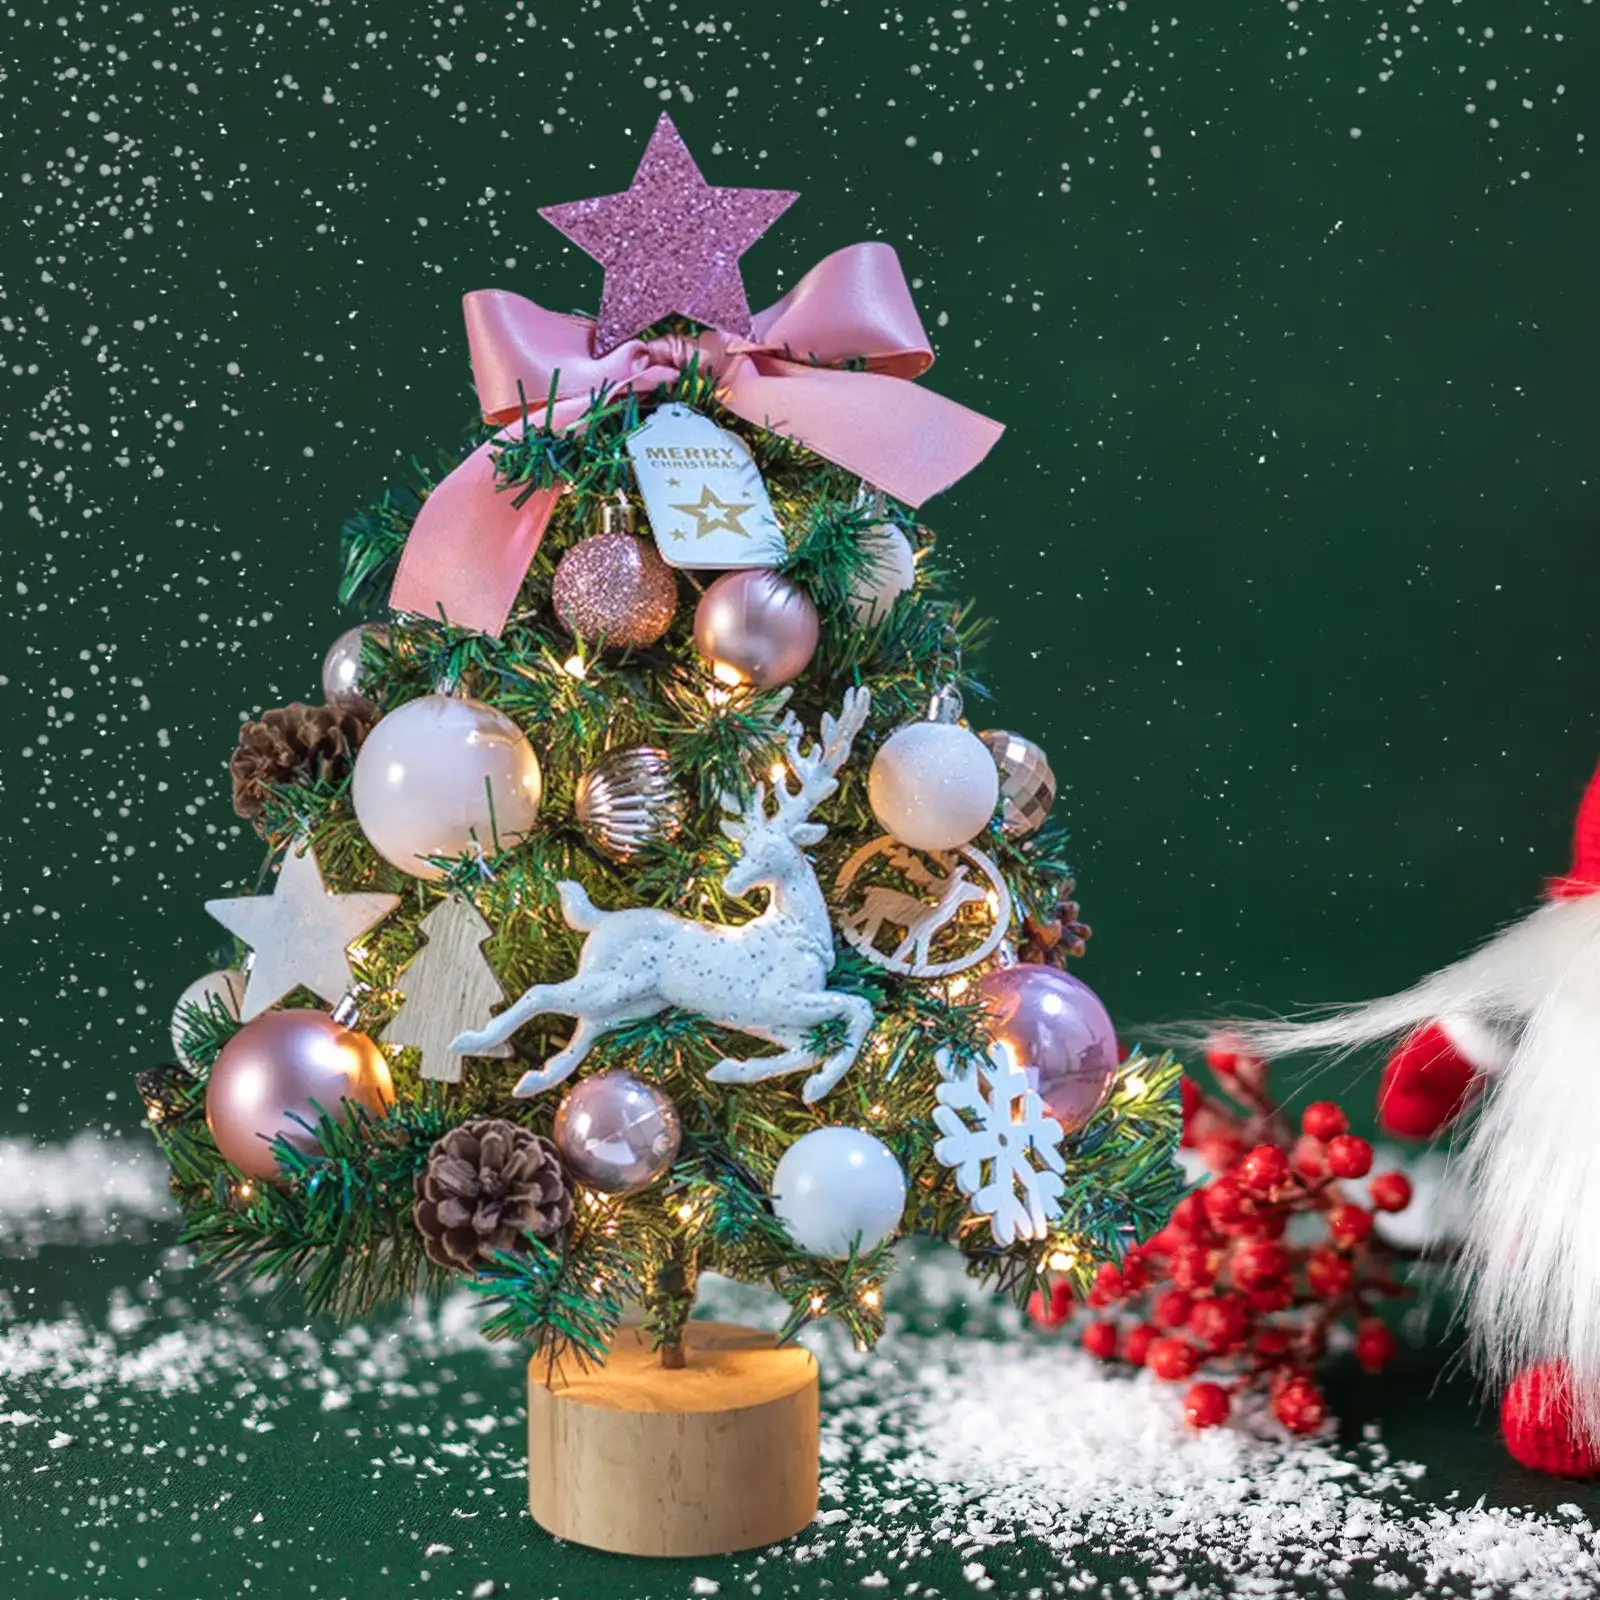 Mini Christmas Tree Christmas Decoration Xmas Decor 45cm Birthday Gift Ornament for Holiday Xmas Tabletop Living Room